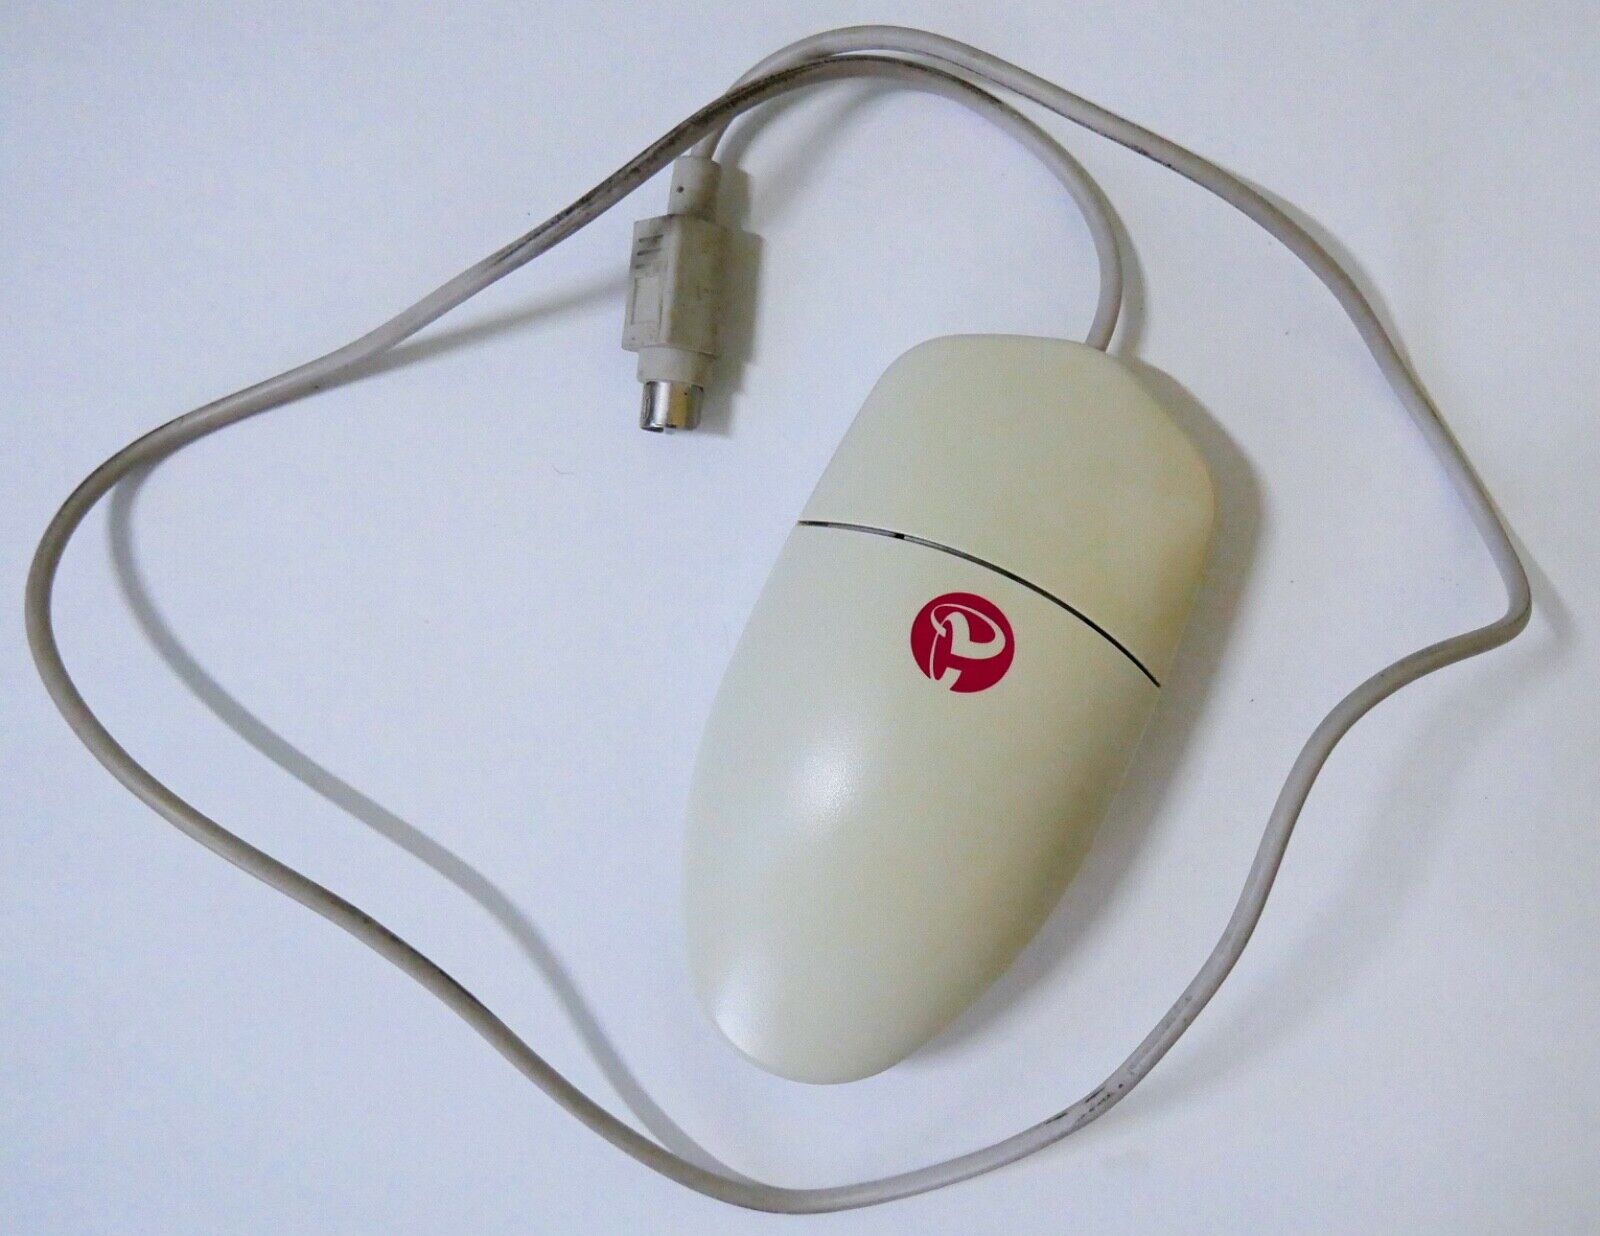 Vintage Apple PowerComputing ADB Mouse